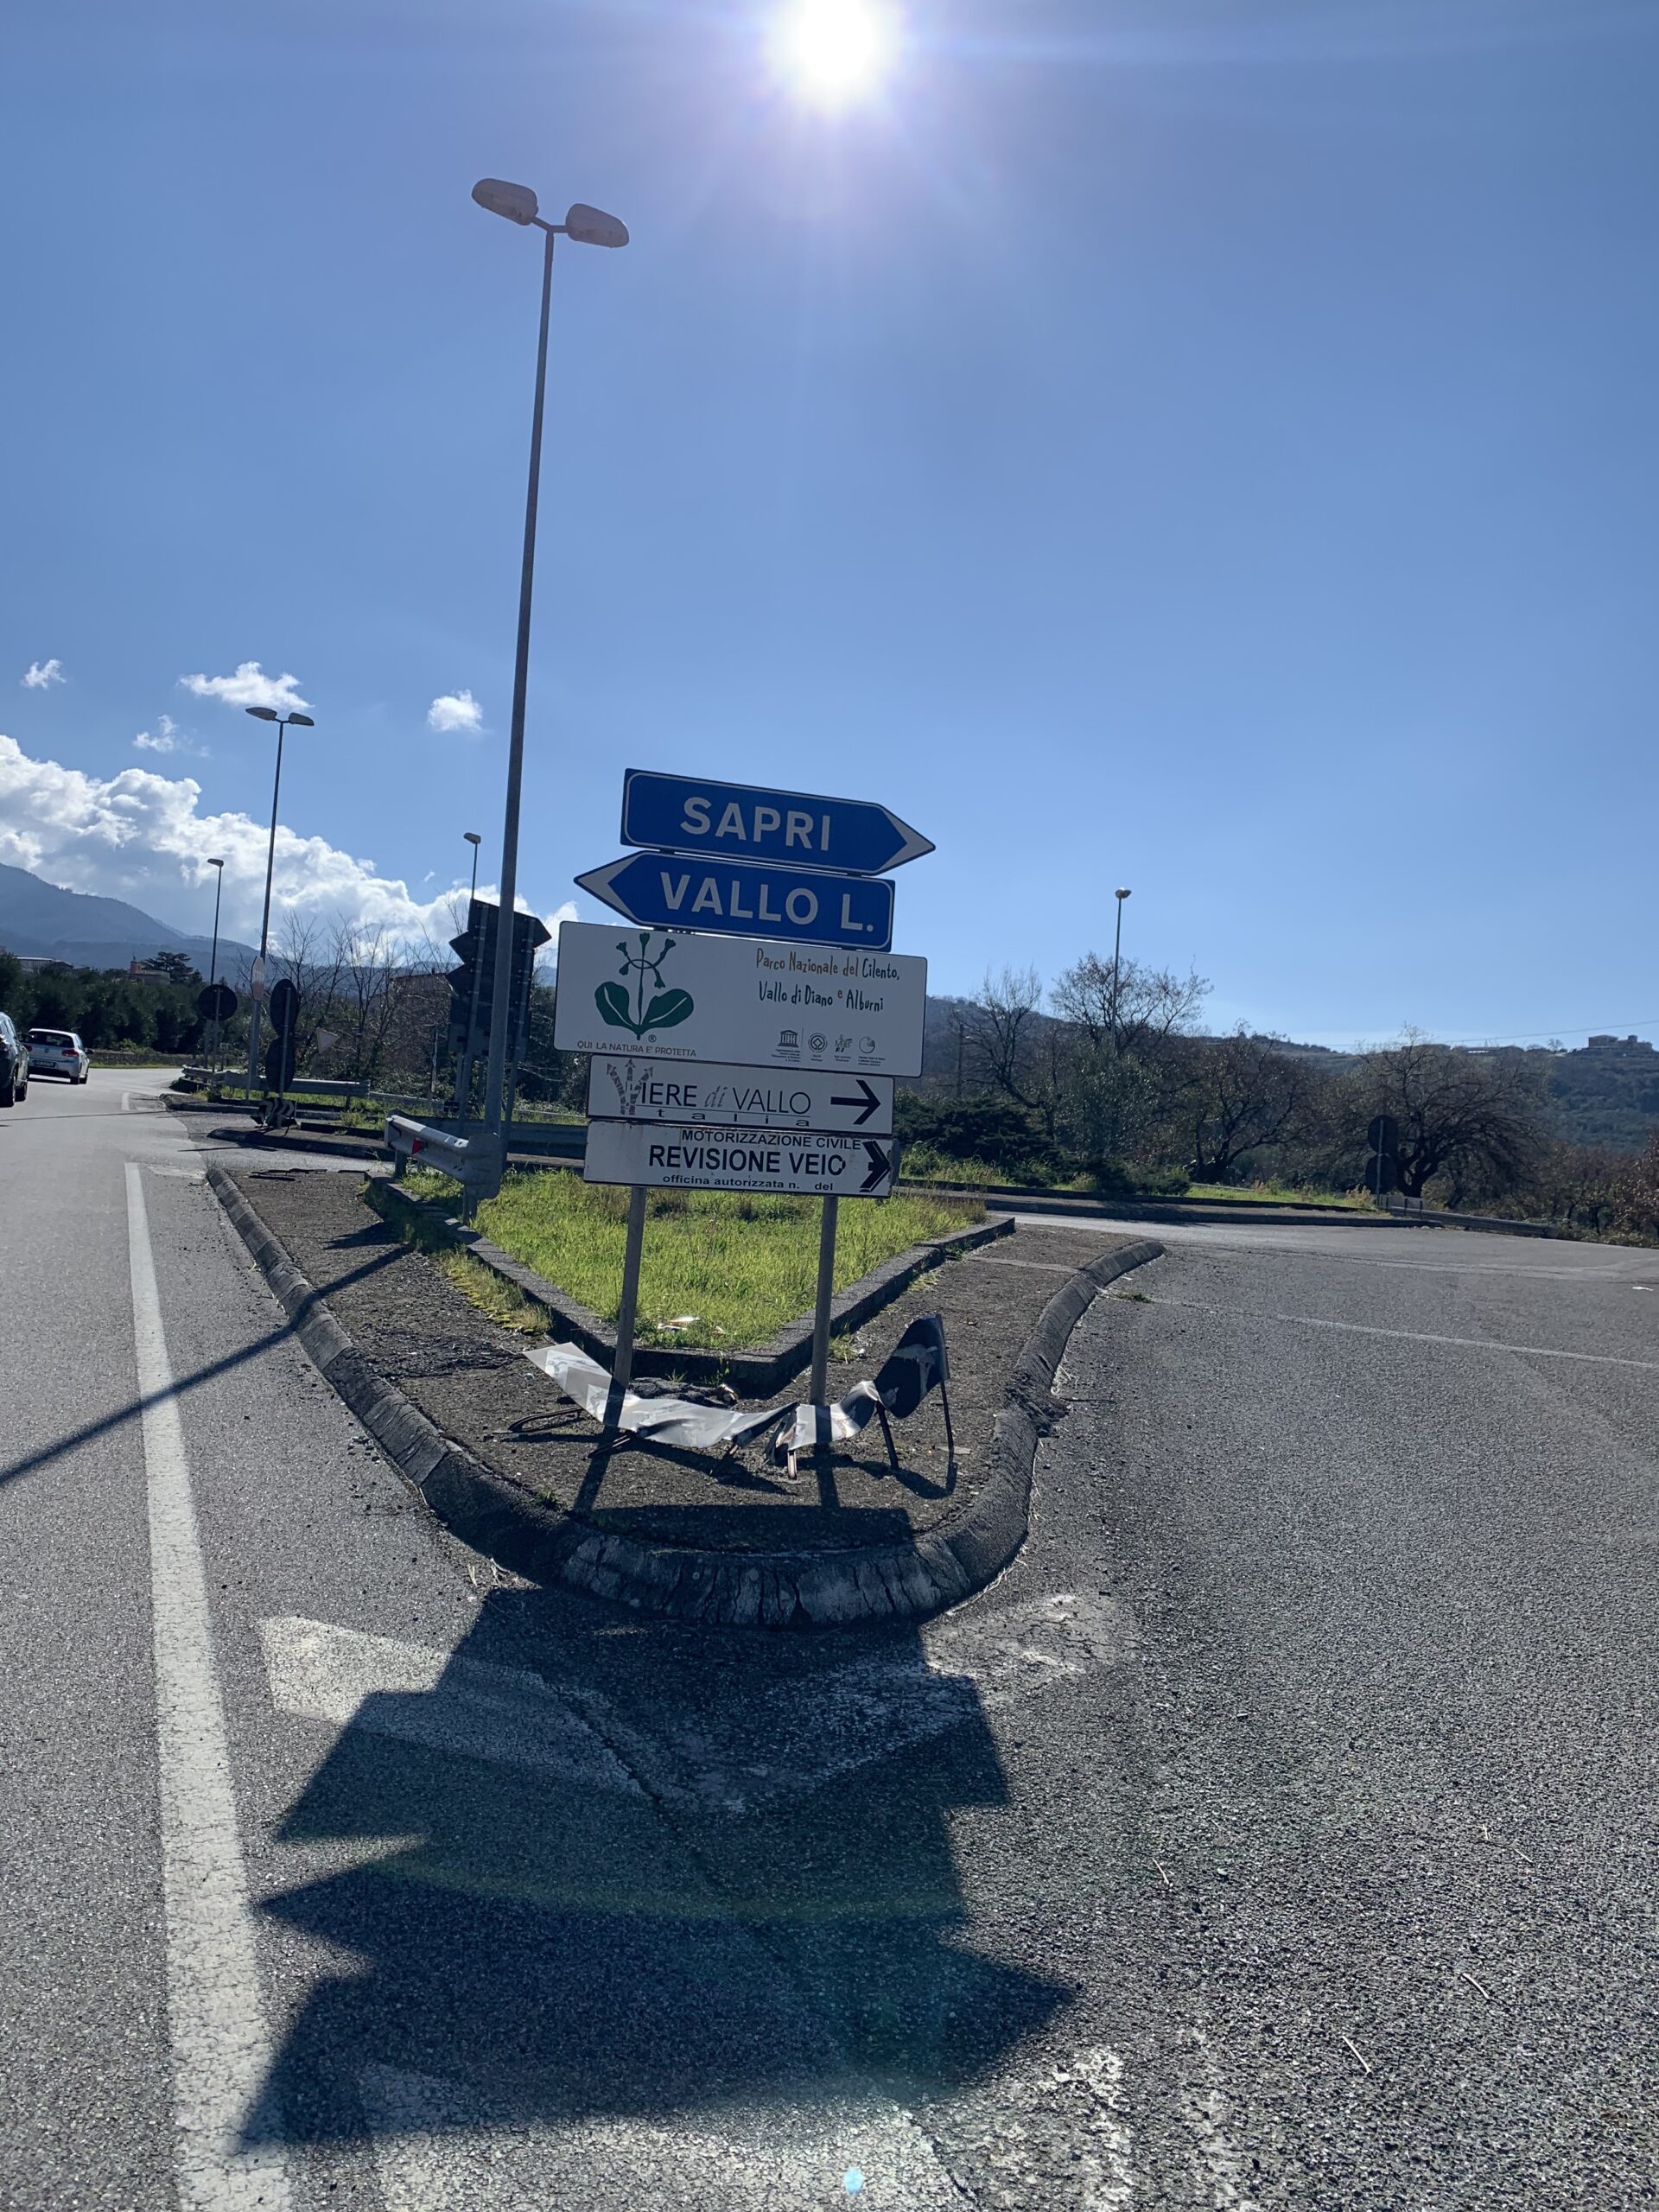 Verkeersbord met Sapri en Vallo della Lucana, en daaronder een bord van Parco Nazionale Cilento